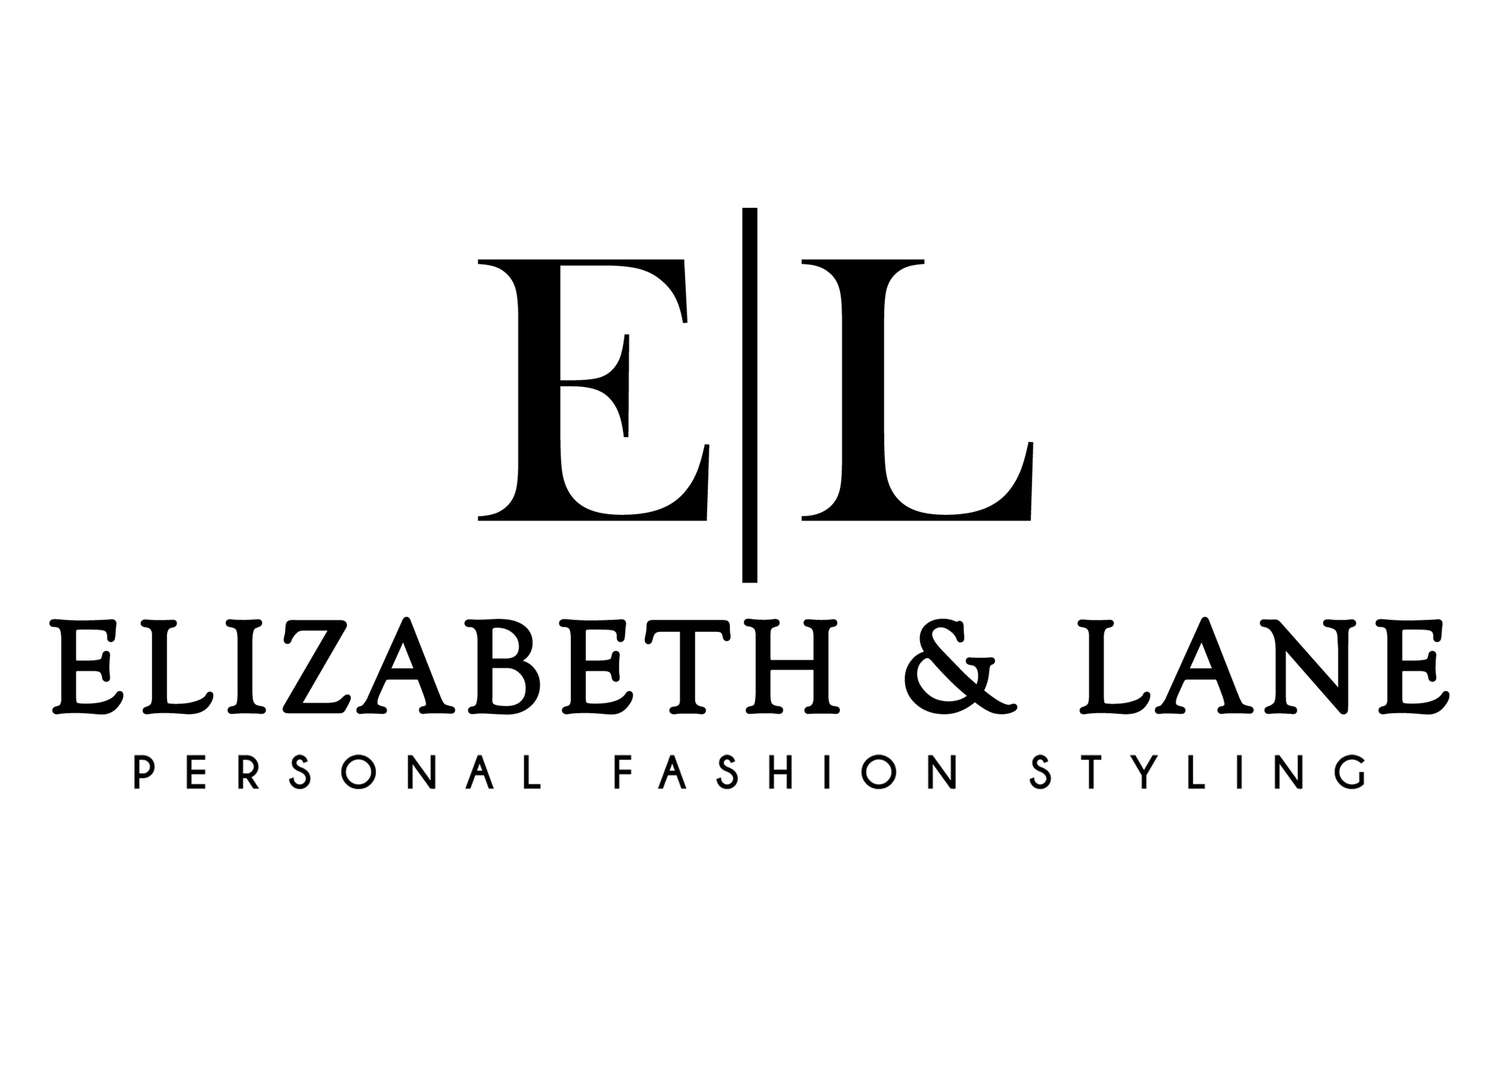 Elizabeth & Lane